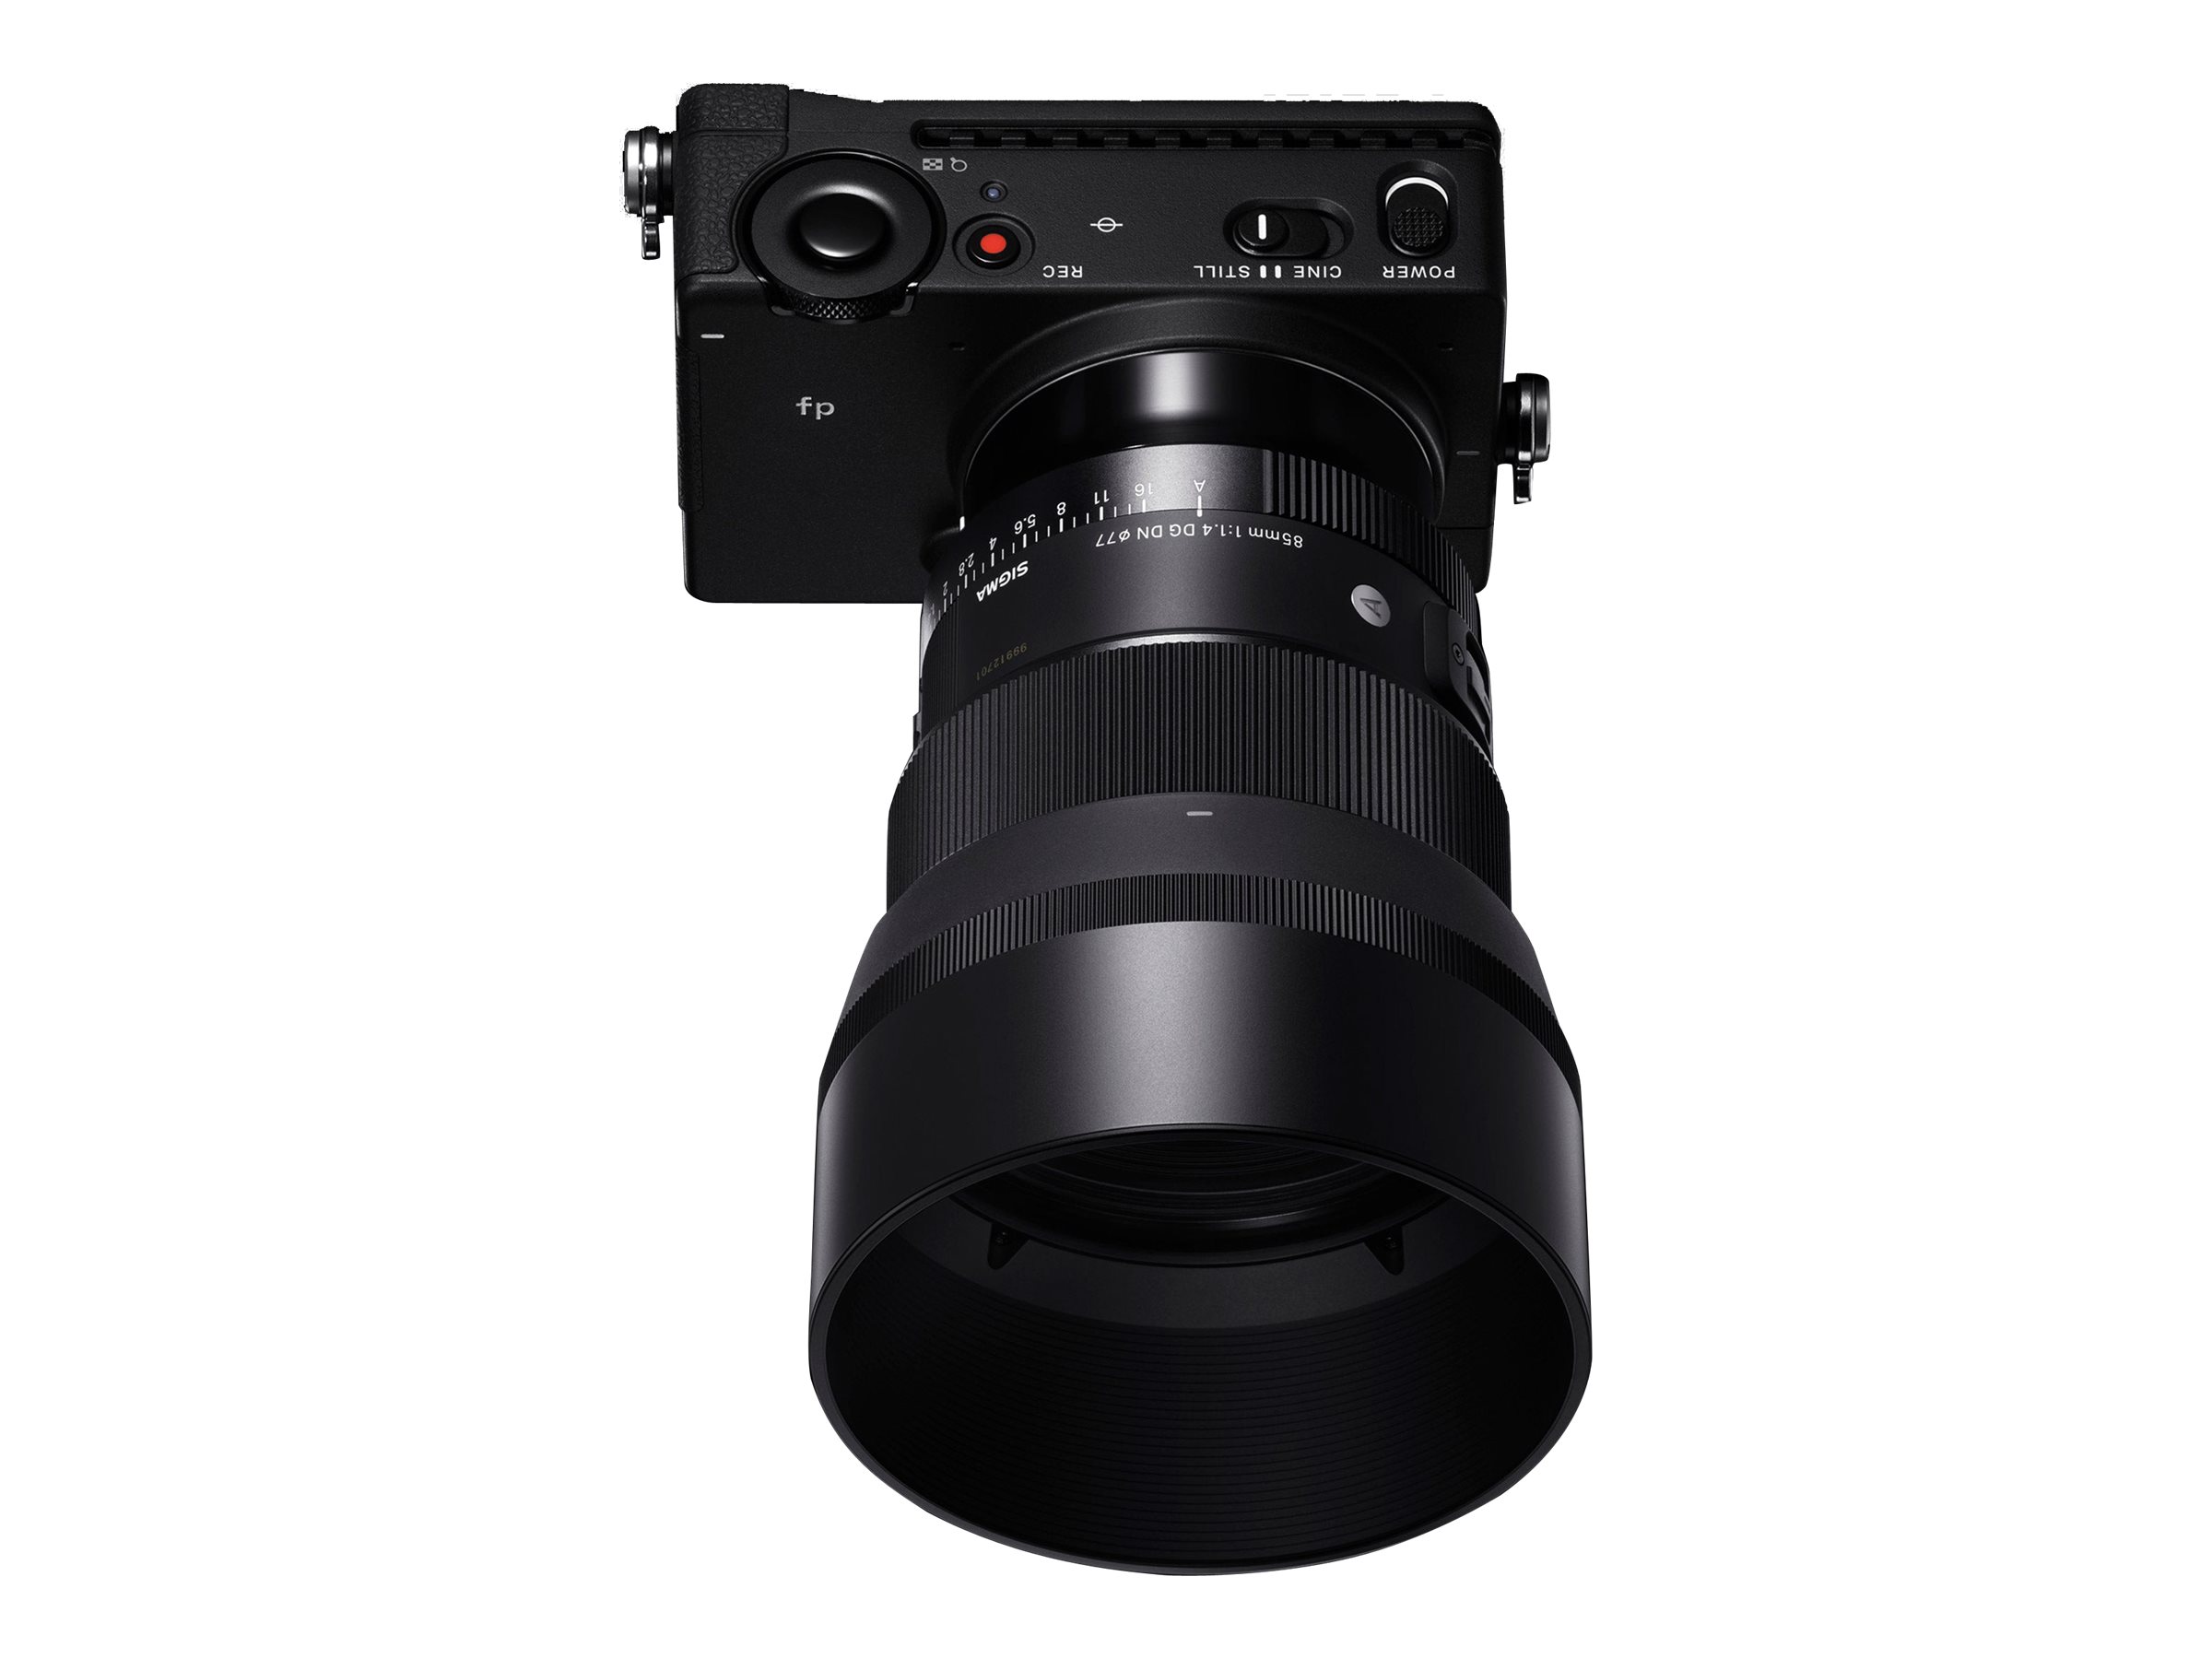 Sigma Art 85mm F1.4 DG DN Lens for Sony - A85DGDNSE